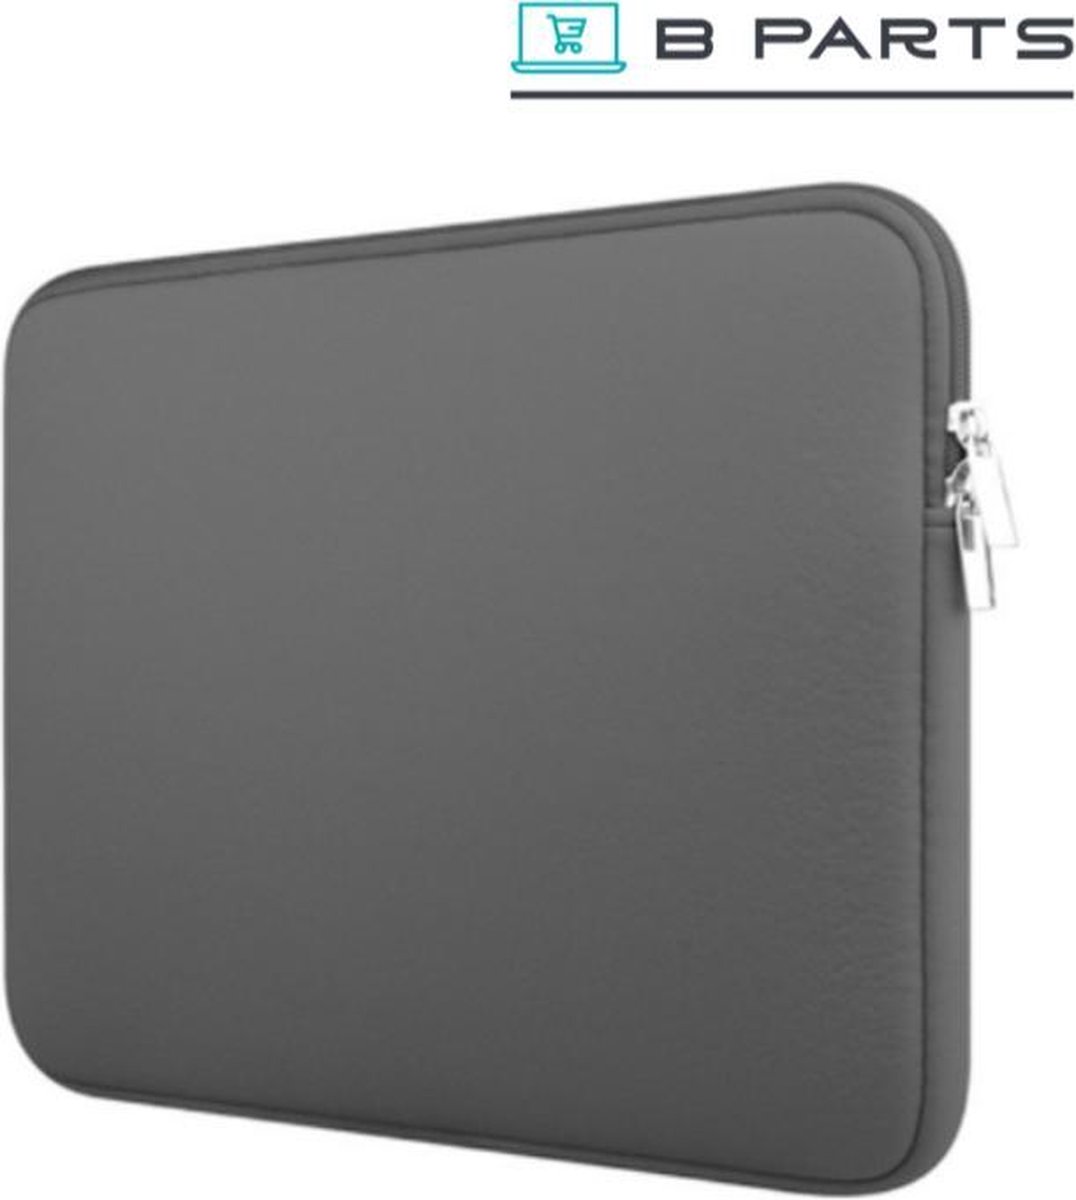 BParts - 13 inch Laptop sleeve - Beschermhoes laptop - Laptophoes - Grijs